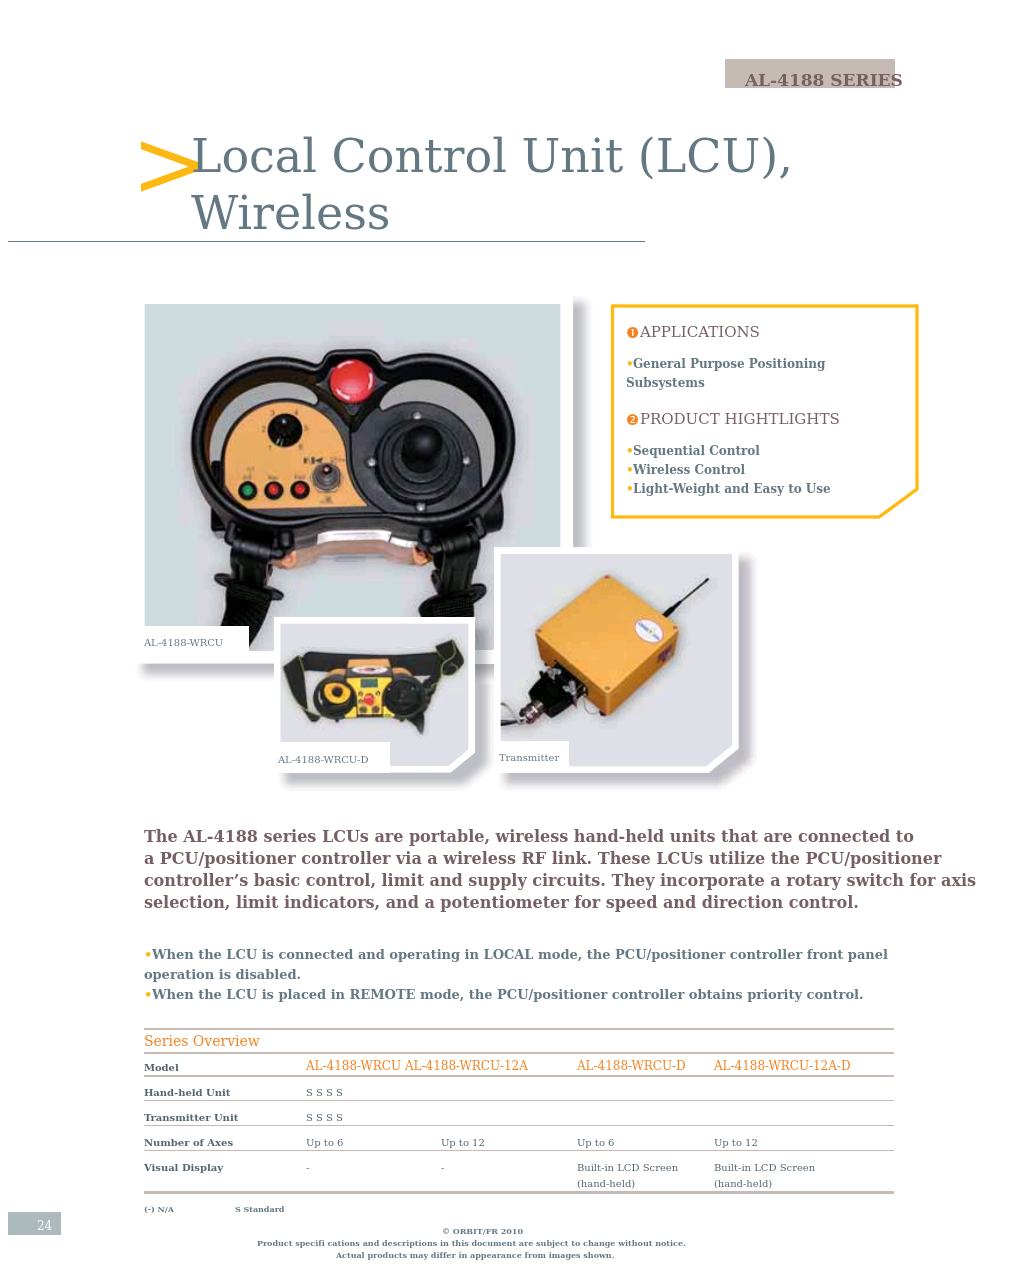 Local Control Units (LCUs), Wireless: AL-4188-WCRU